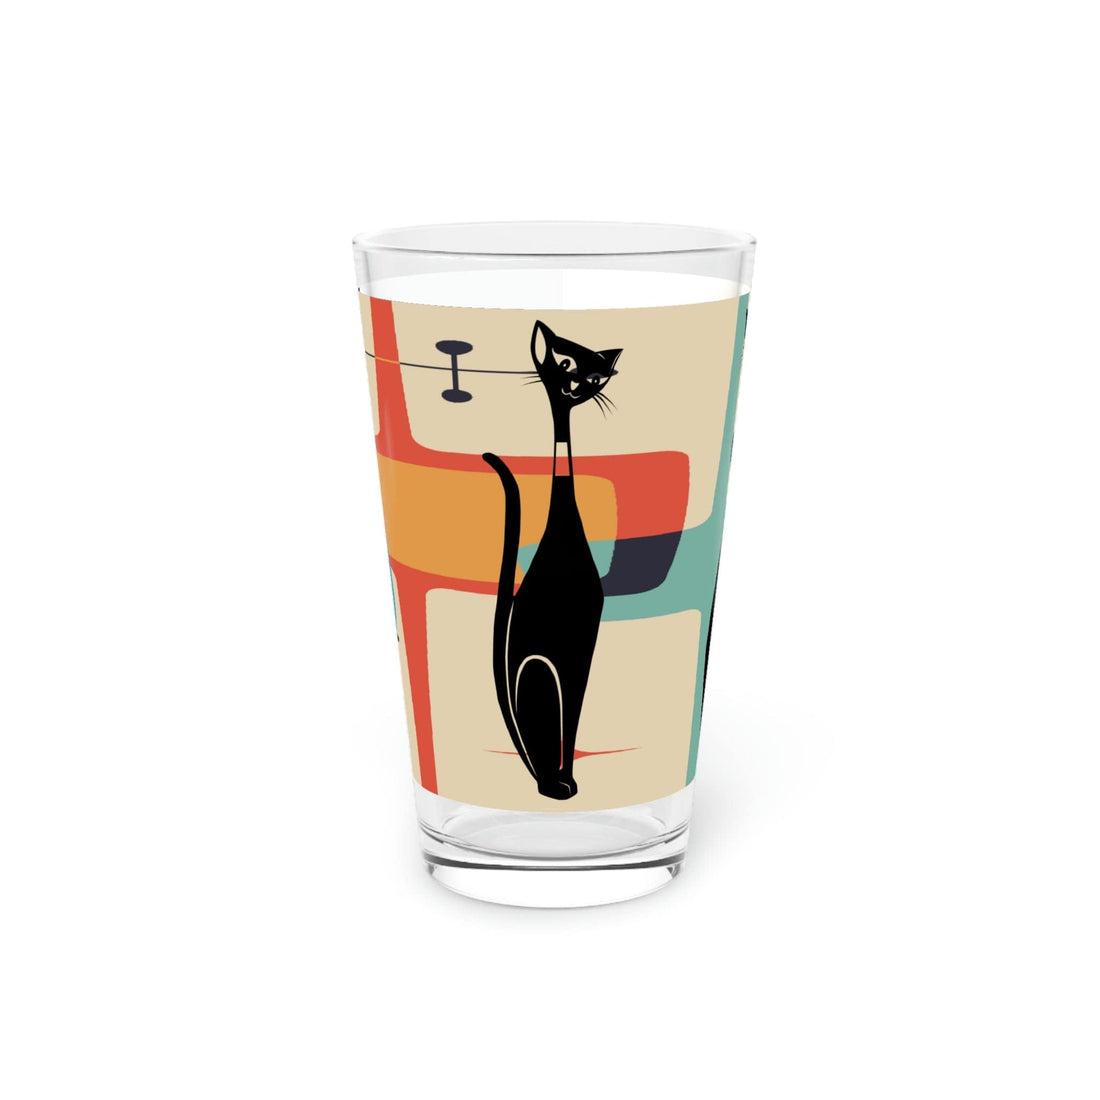 Kate McEnroe New York Atomic Kitschy Cat Pint Glass, 16oz Mid Century Modern Geometric Starburst Beer Glass, Retro Shaker Glass, Beer Glassware GiftsBeer Glasses25583201968219499875